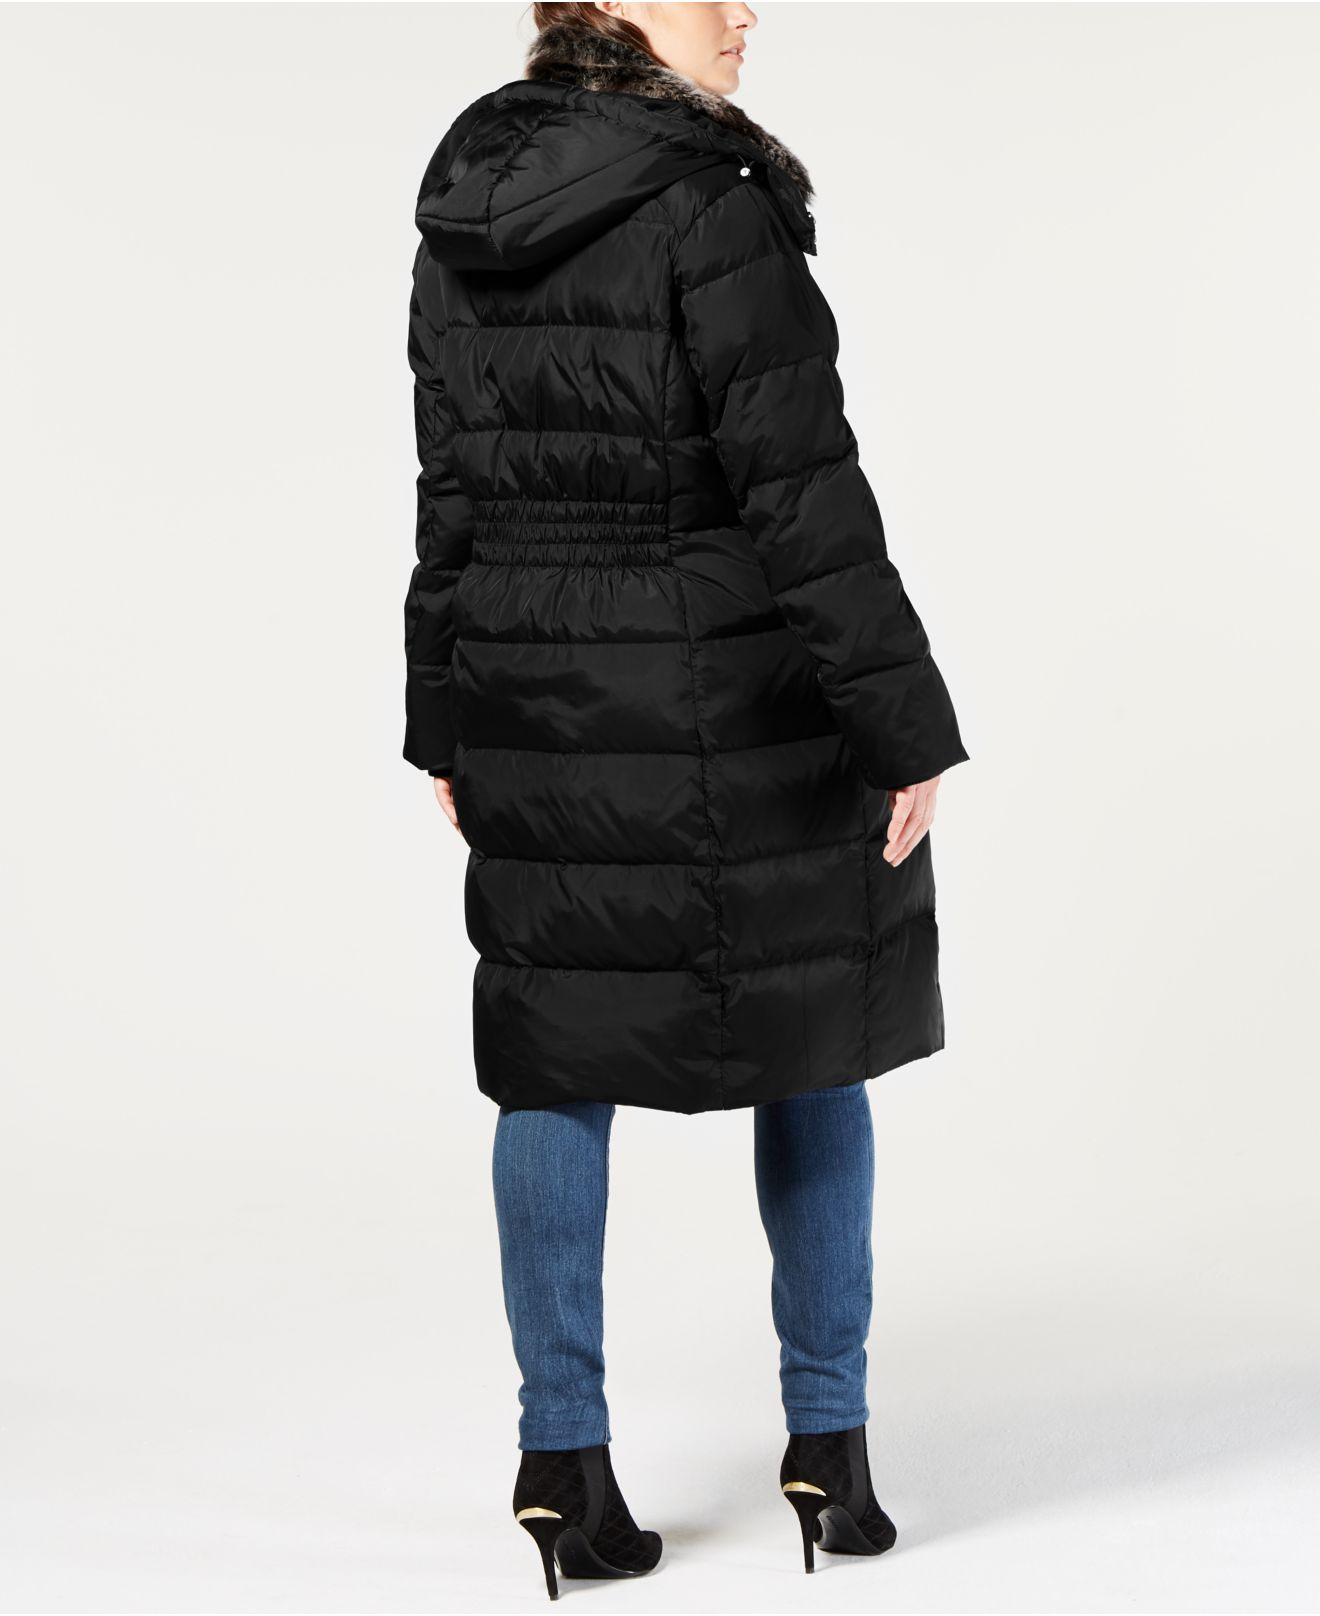 London Fog Plus Size Hooded Faux-fur-trim Down Puffer Coat in Black - Lyst